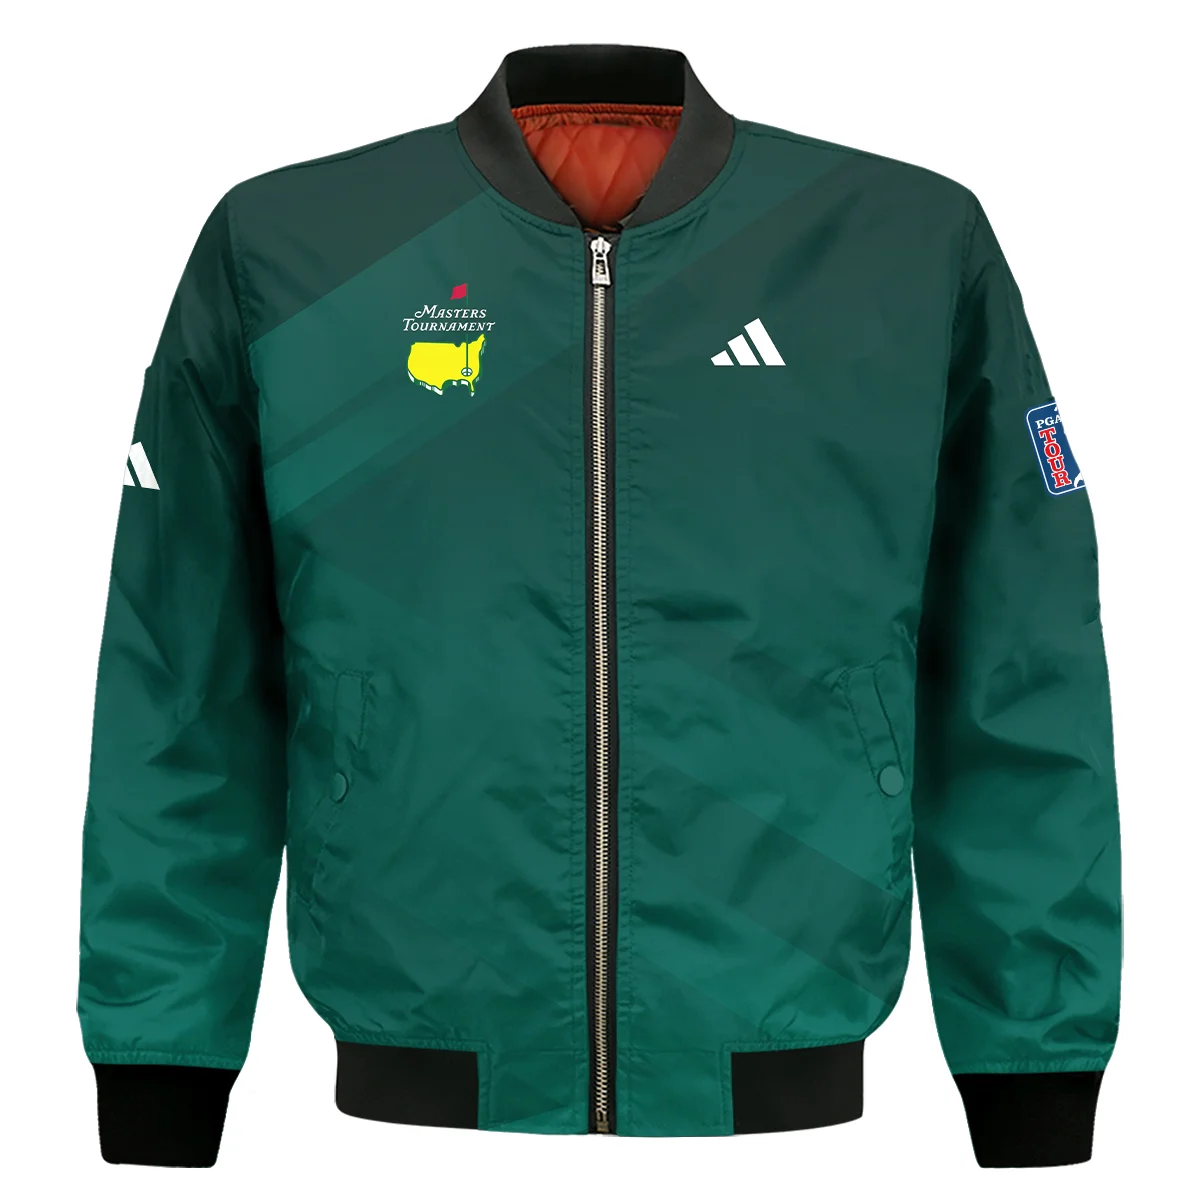 Masters Tournament Dark Green Gradient Golf Sport Adidas Bomber Jacket Style Classic Bomber Jacket